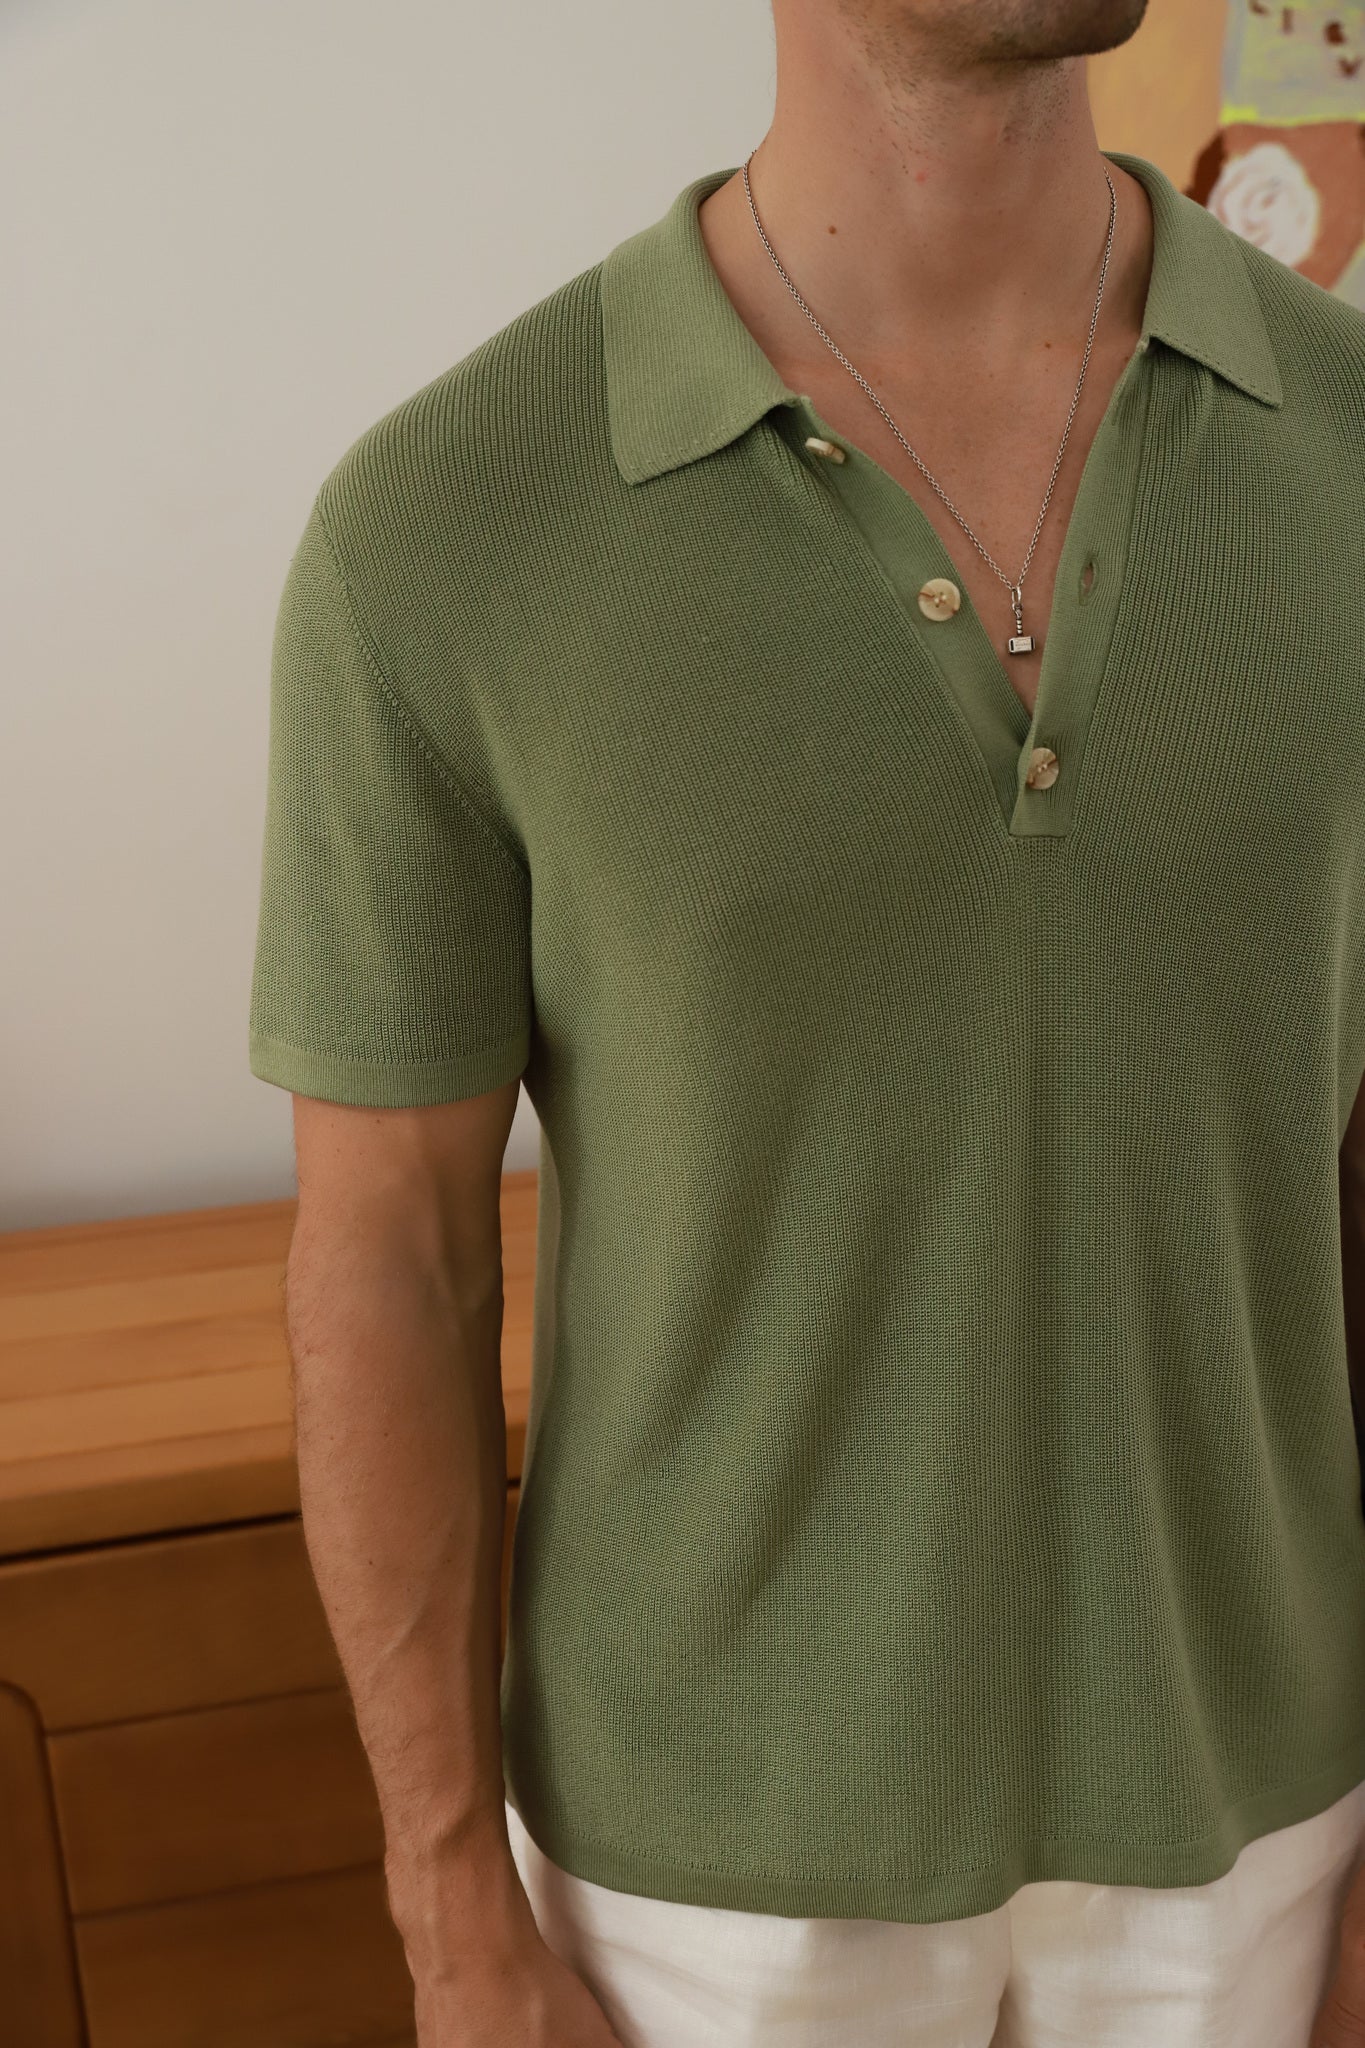 Green braided V-neck knit polo shirt